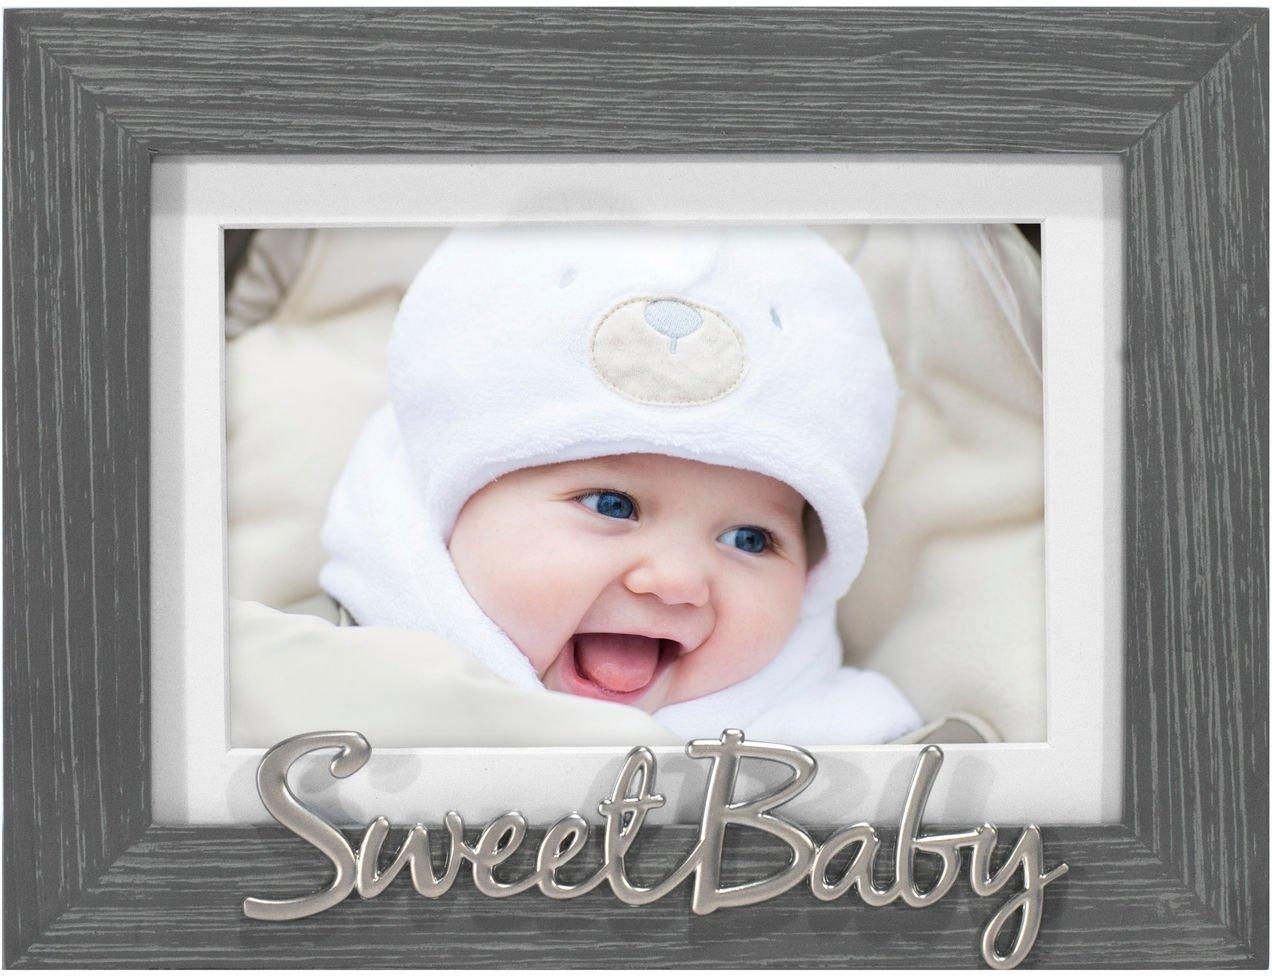 4'' x 6'' Sweet Baby Photo Frame